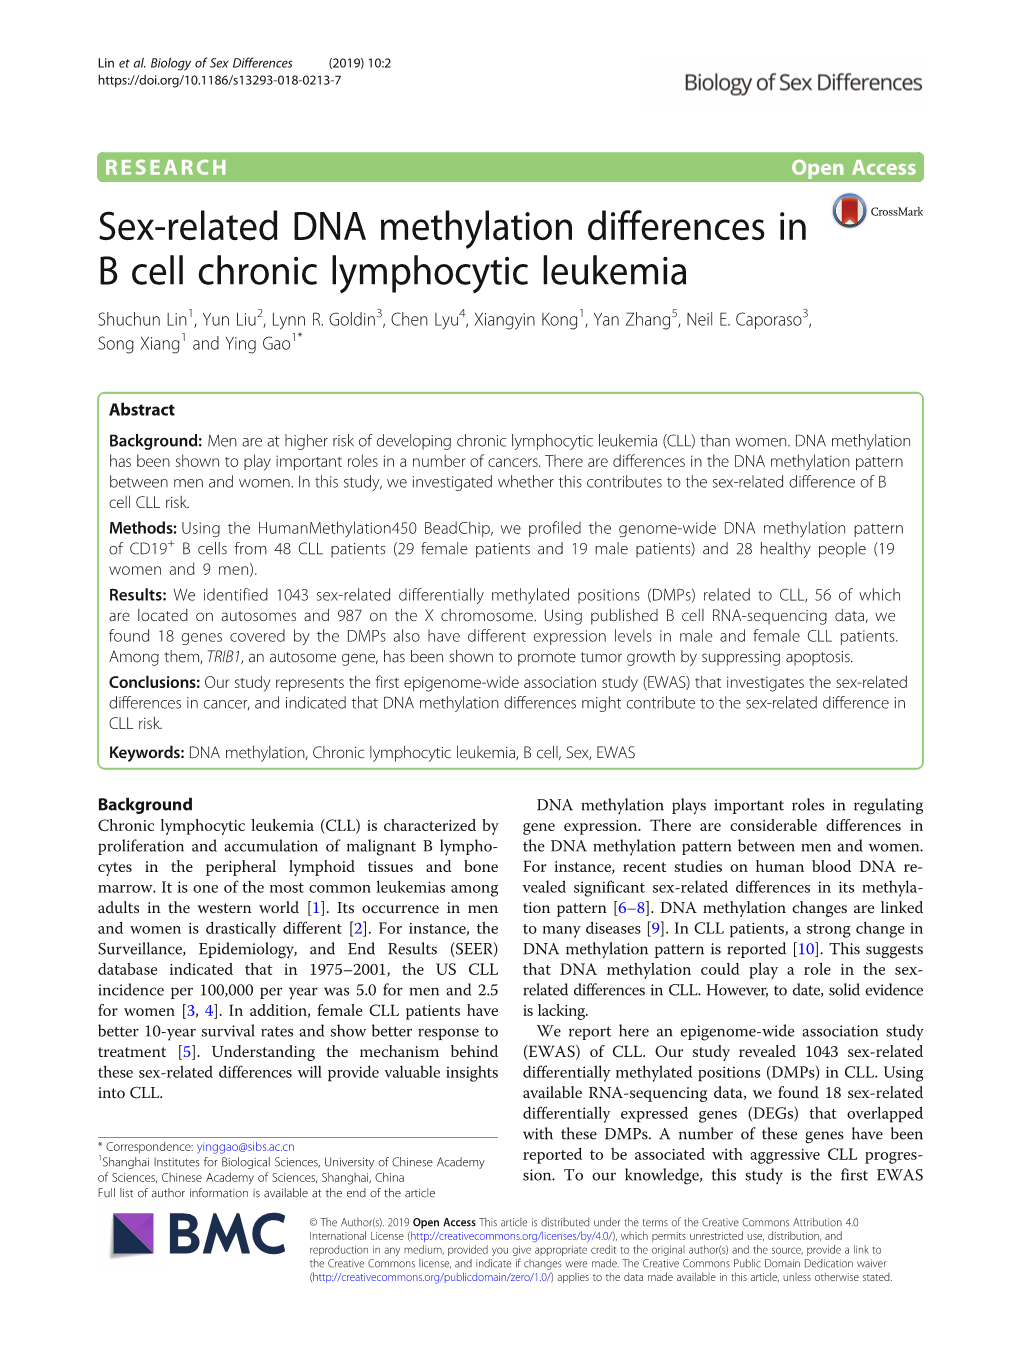 Sex-Related DNA Methylation Differences in B Cell Chronic Lymphocytic Leukemia Shuchun Lin1, Yun Liu2, Lynn R